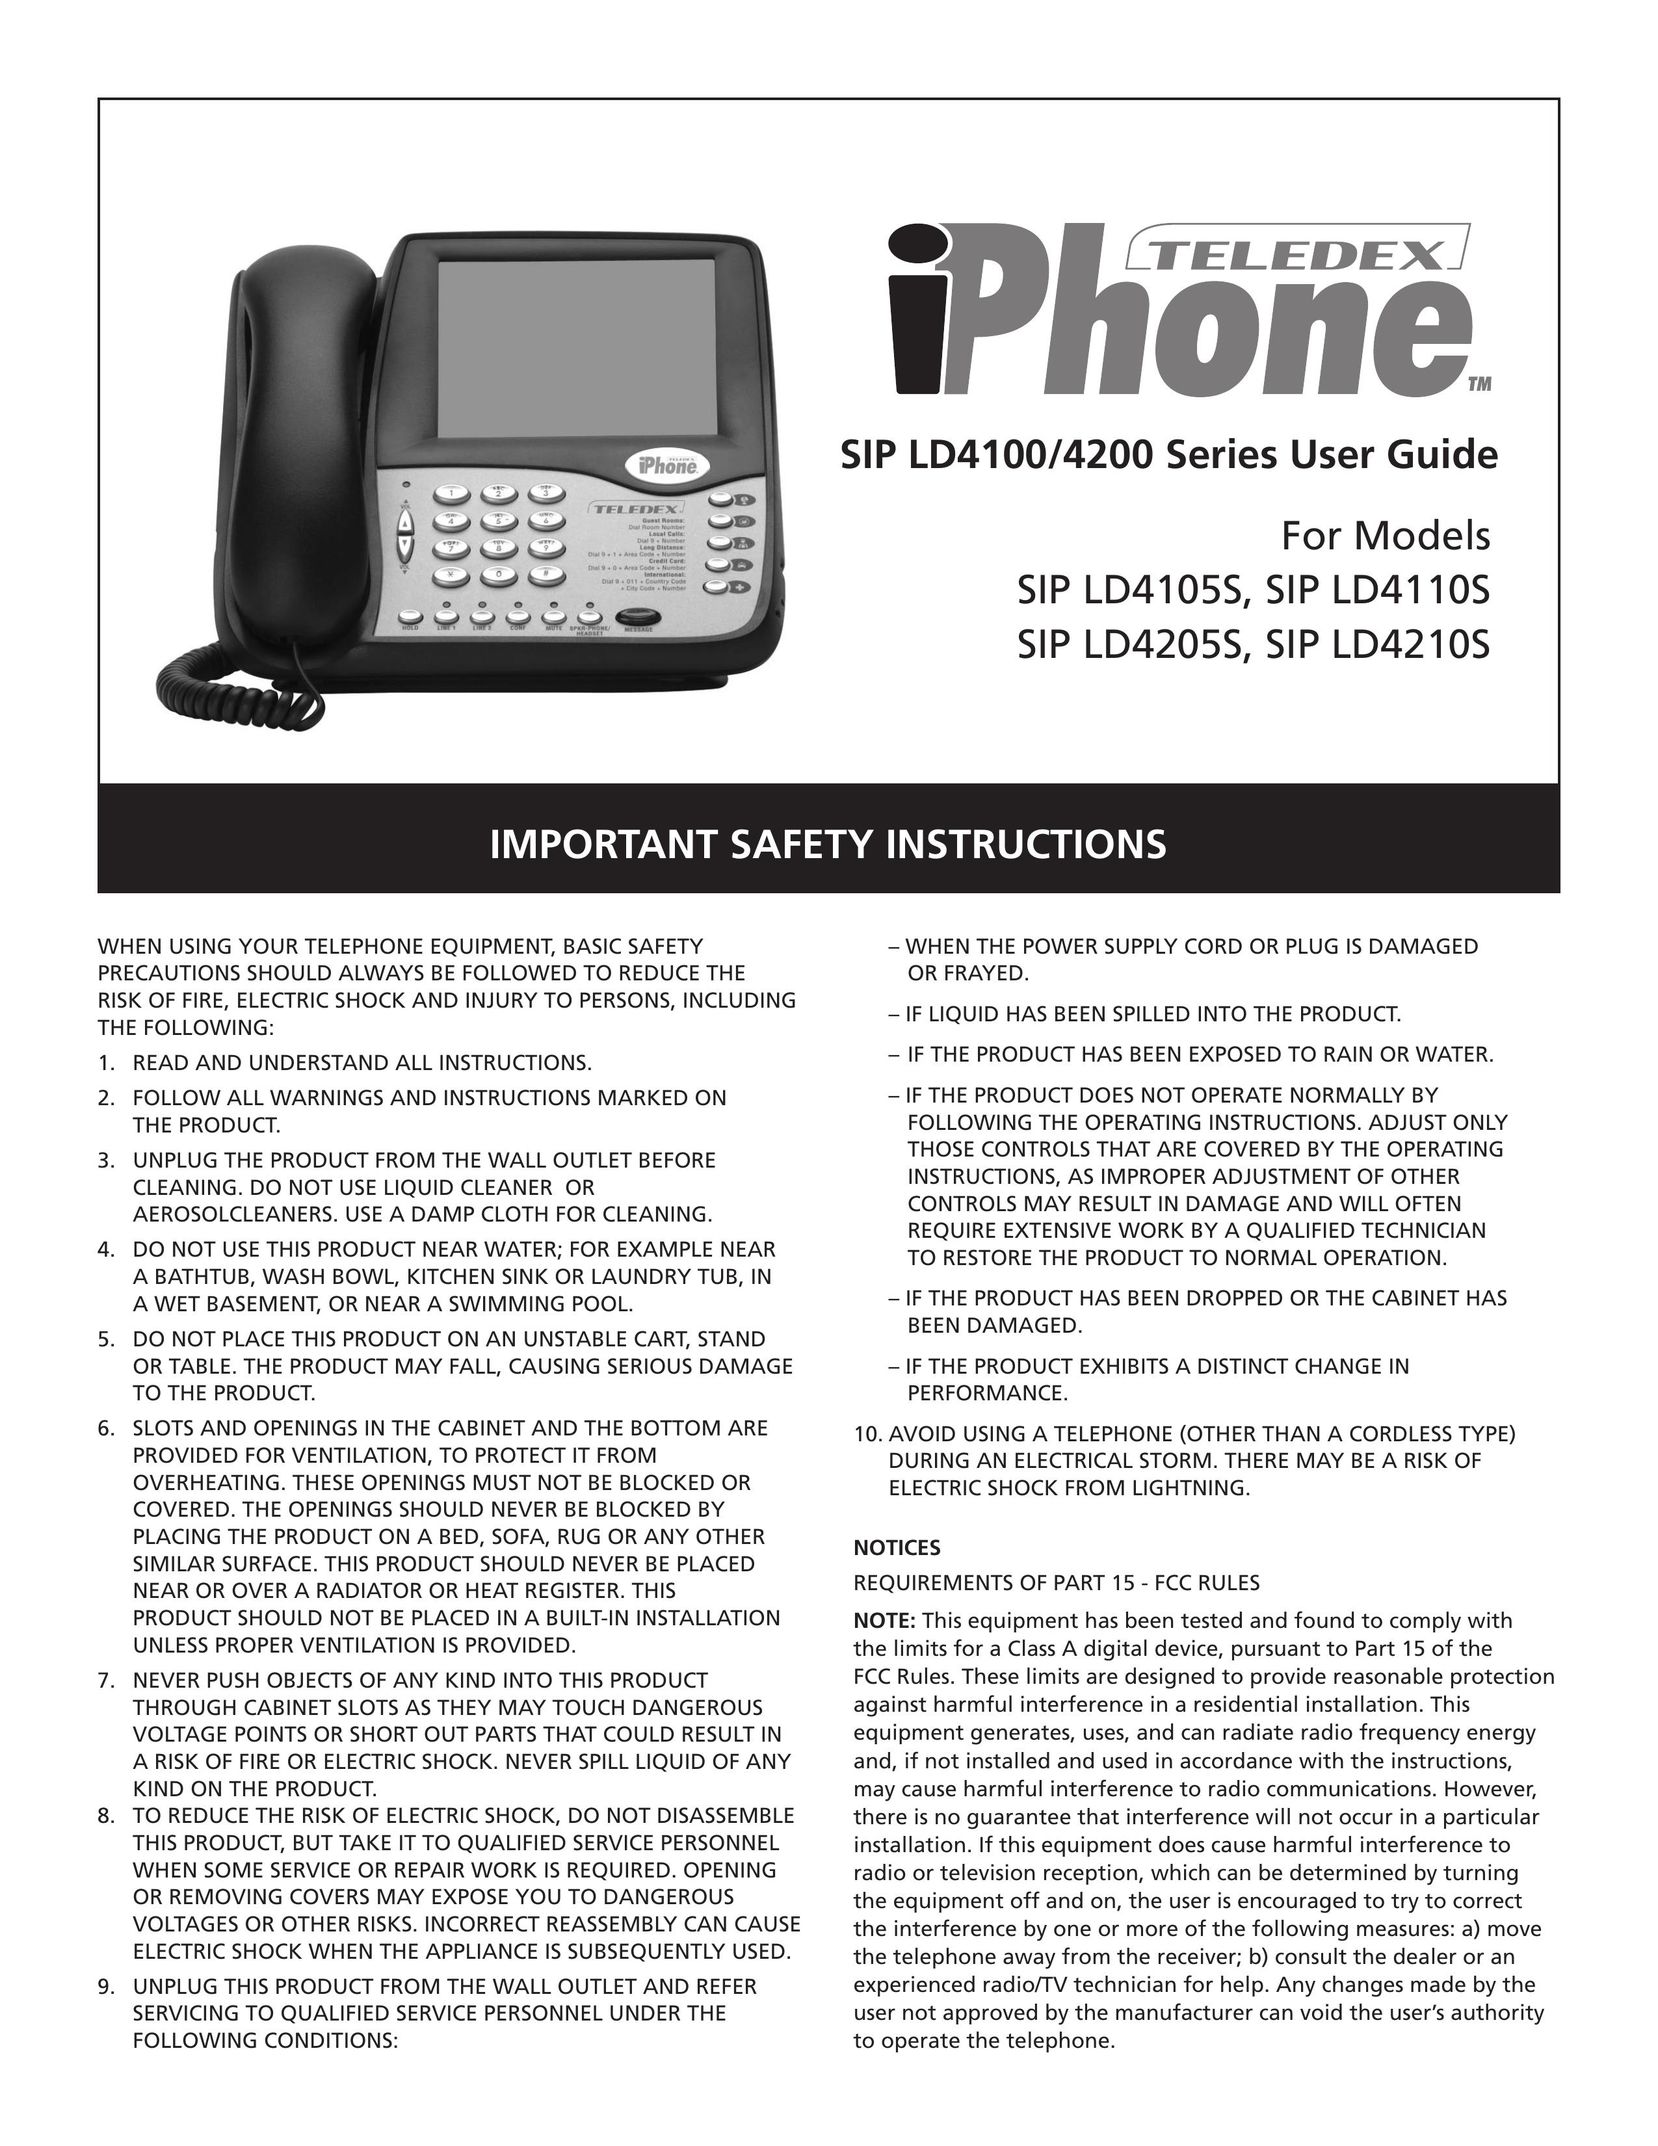 Teledex SIP LD4200 Telephone User Manual